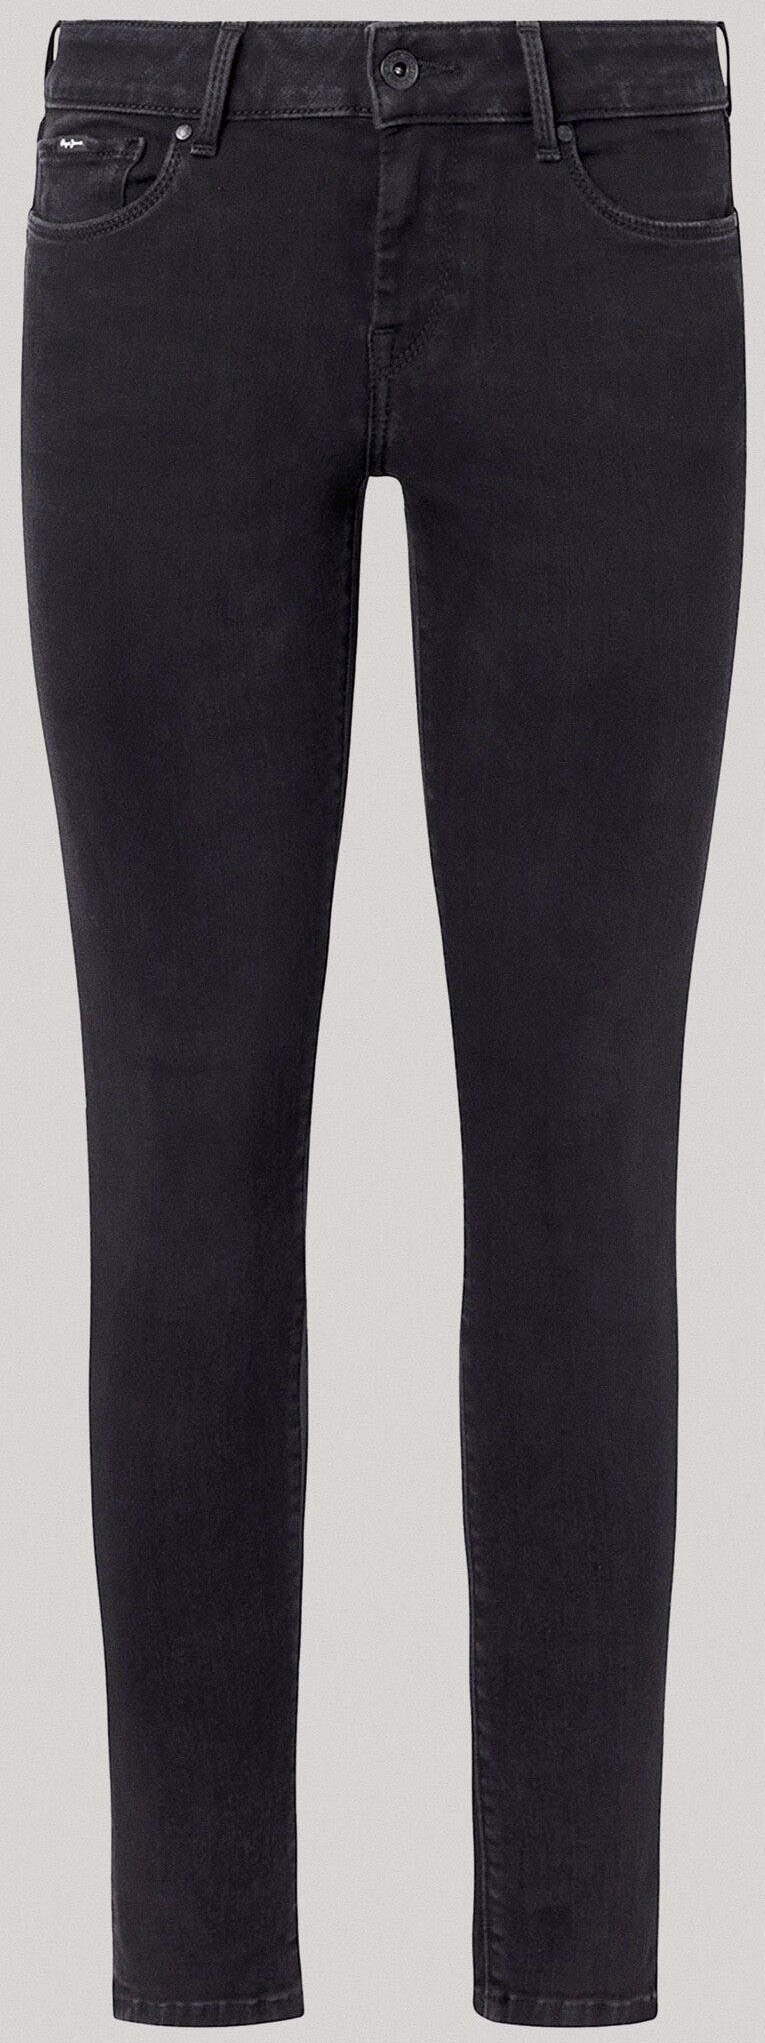 Pepe Jeans im black Stretch-Anteil 5-Pocket-Stil und mit 1-Knopf Bund Skinny-fit-Jeans SOHO